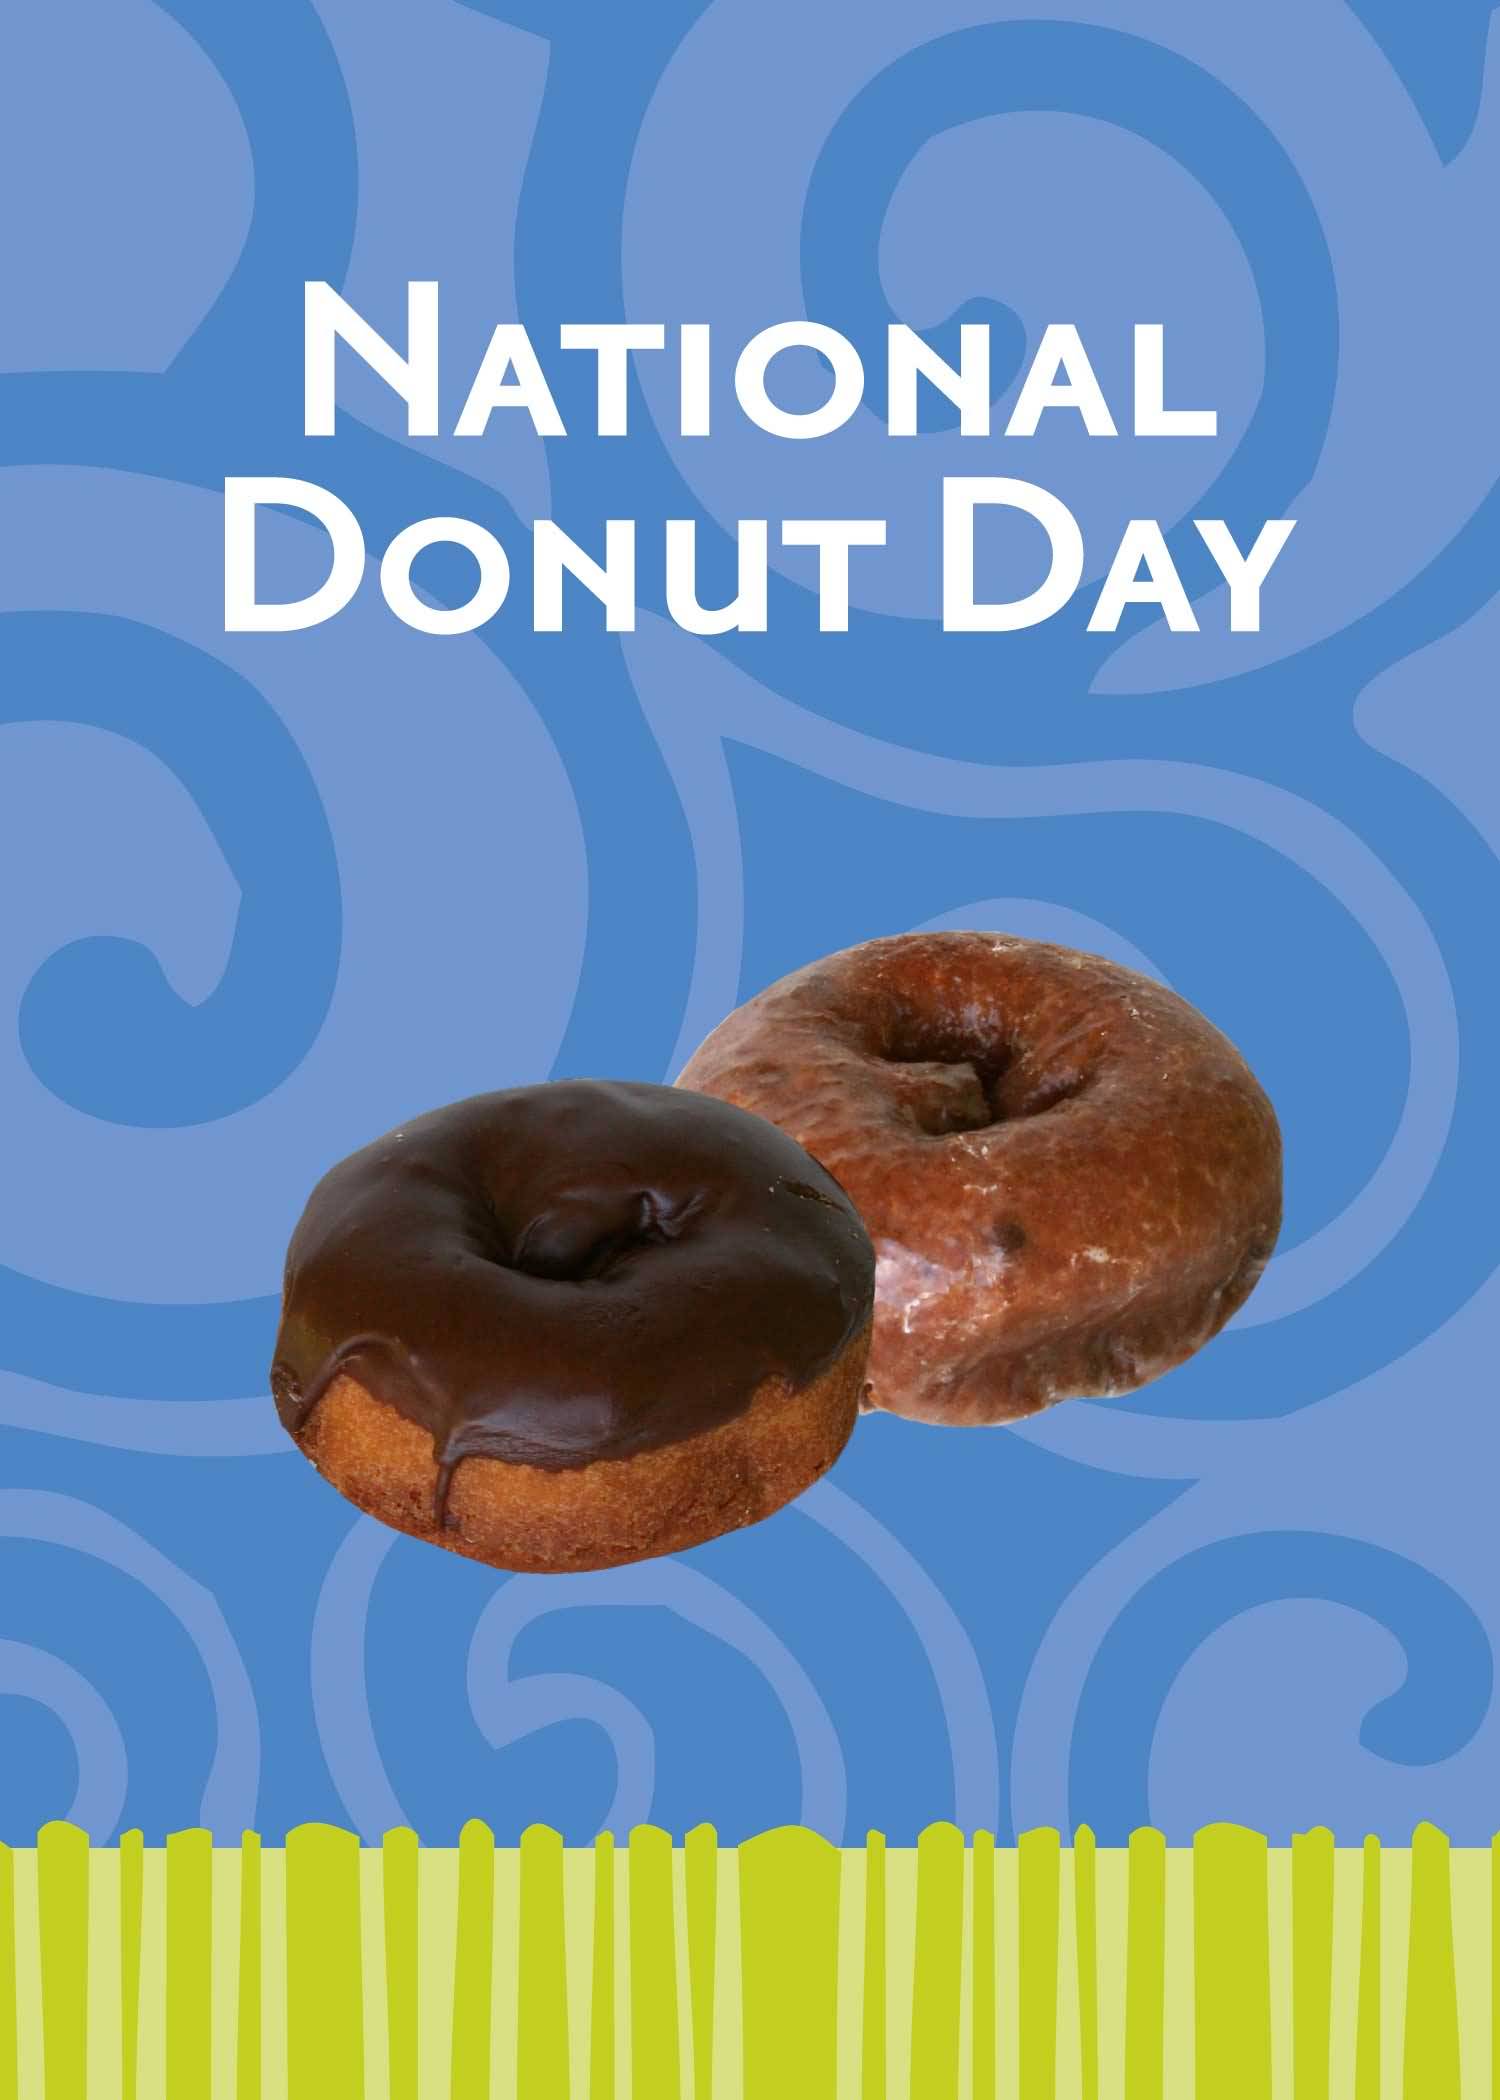 National Doughnut Day 2016 Image For Facebook